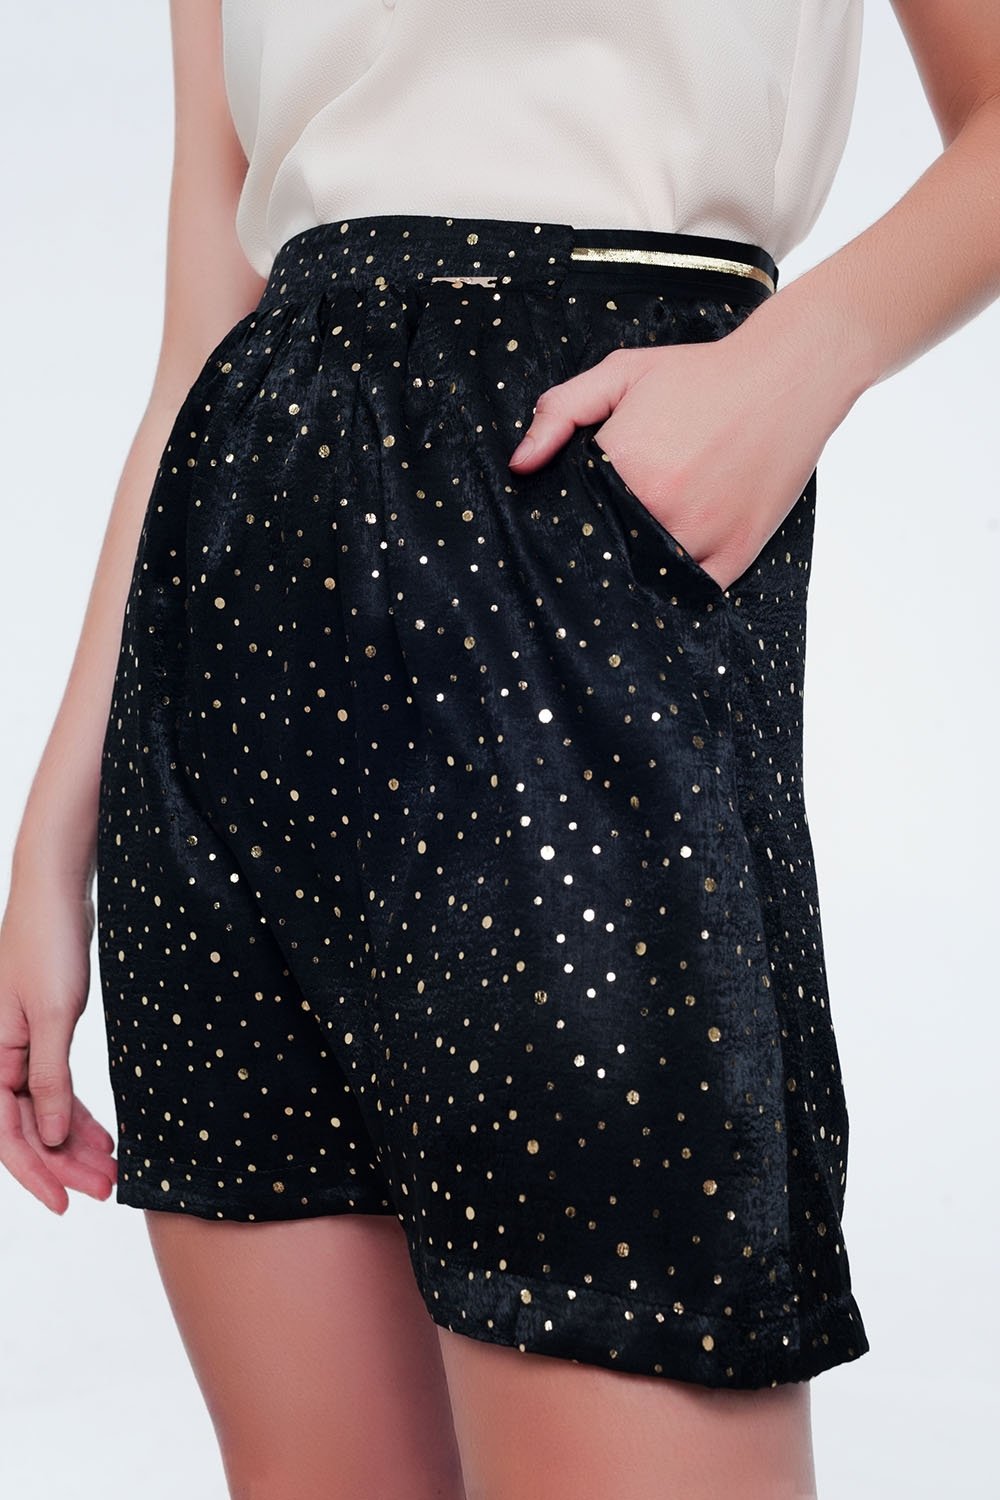 Black Mini Skirt With Pleats in Gold Polka Dot